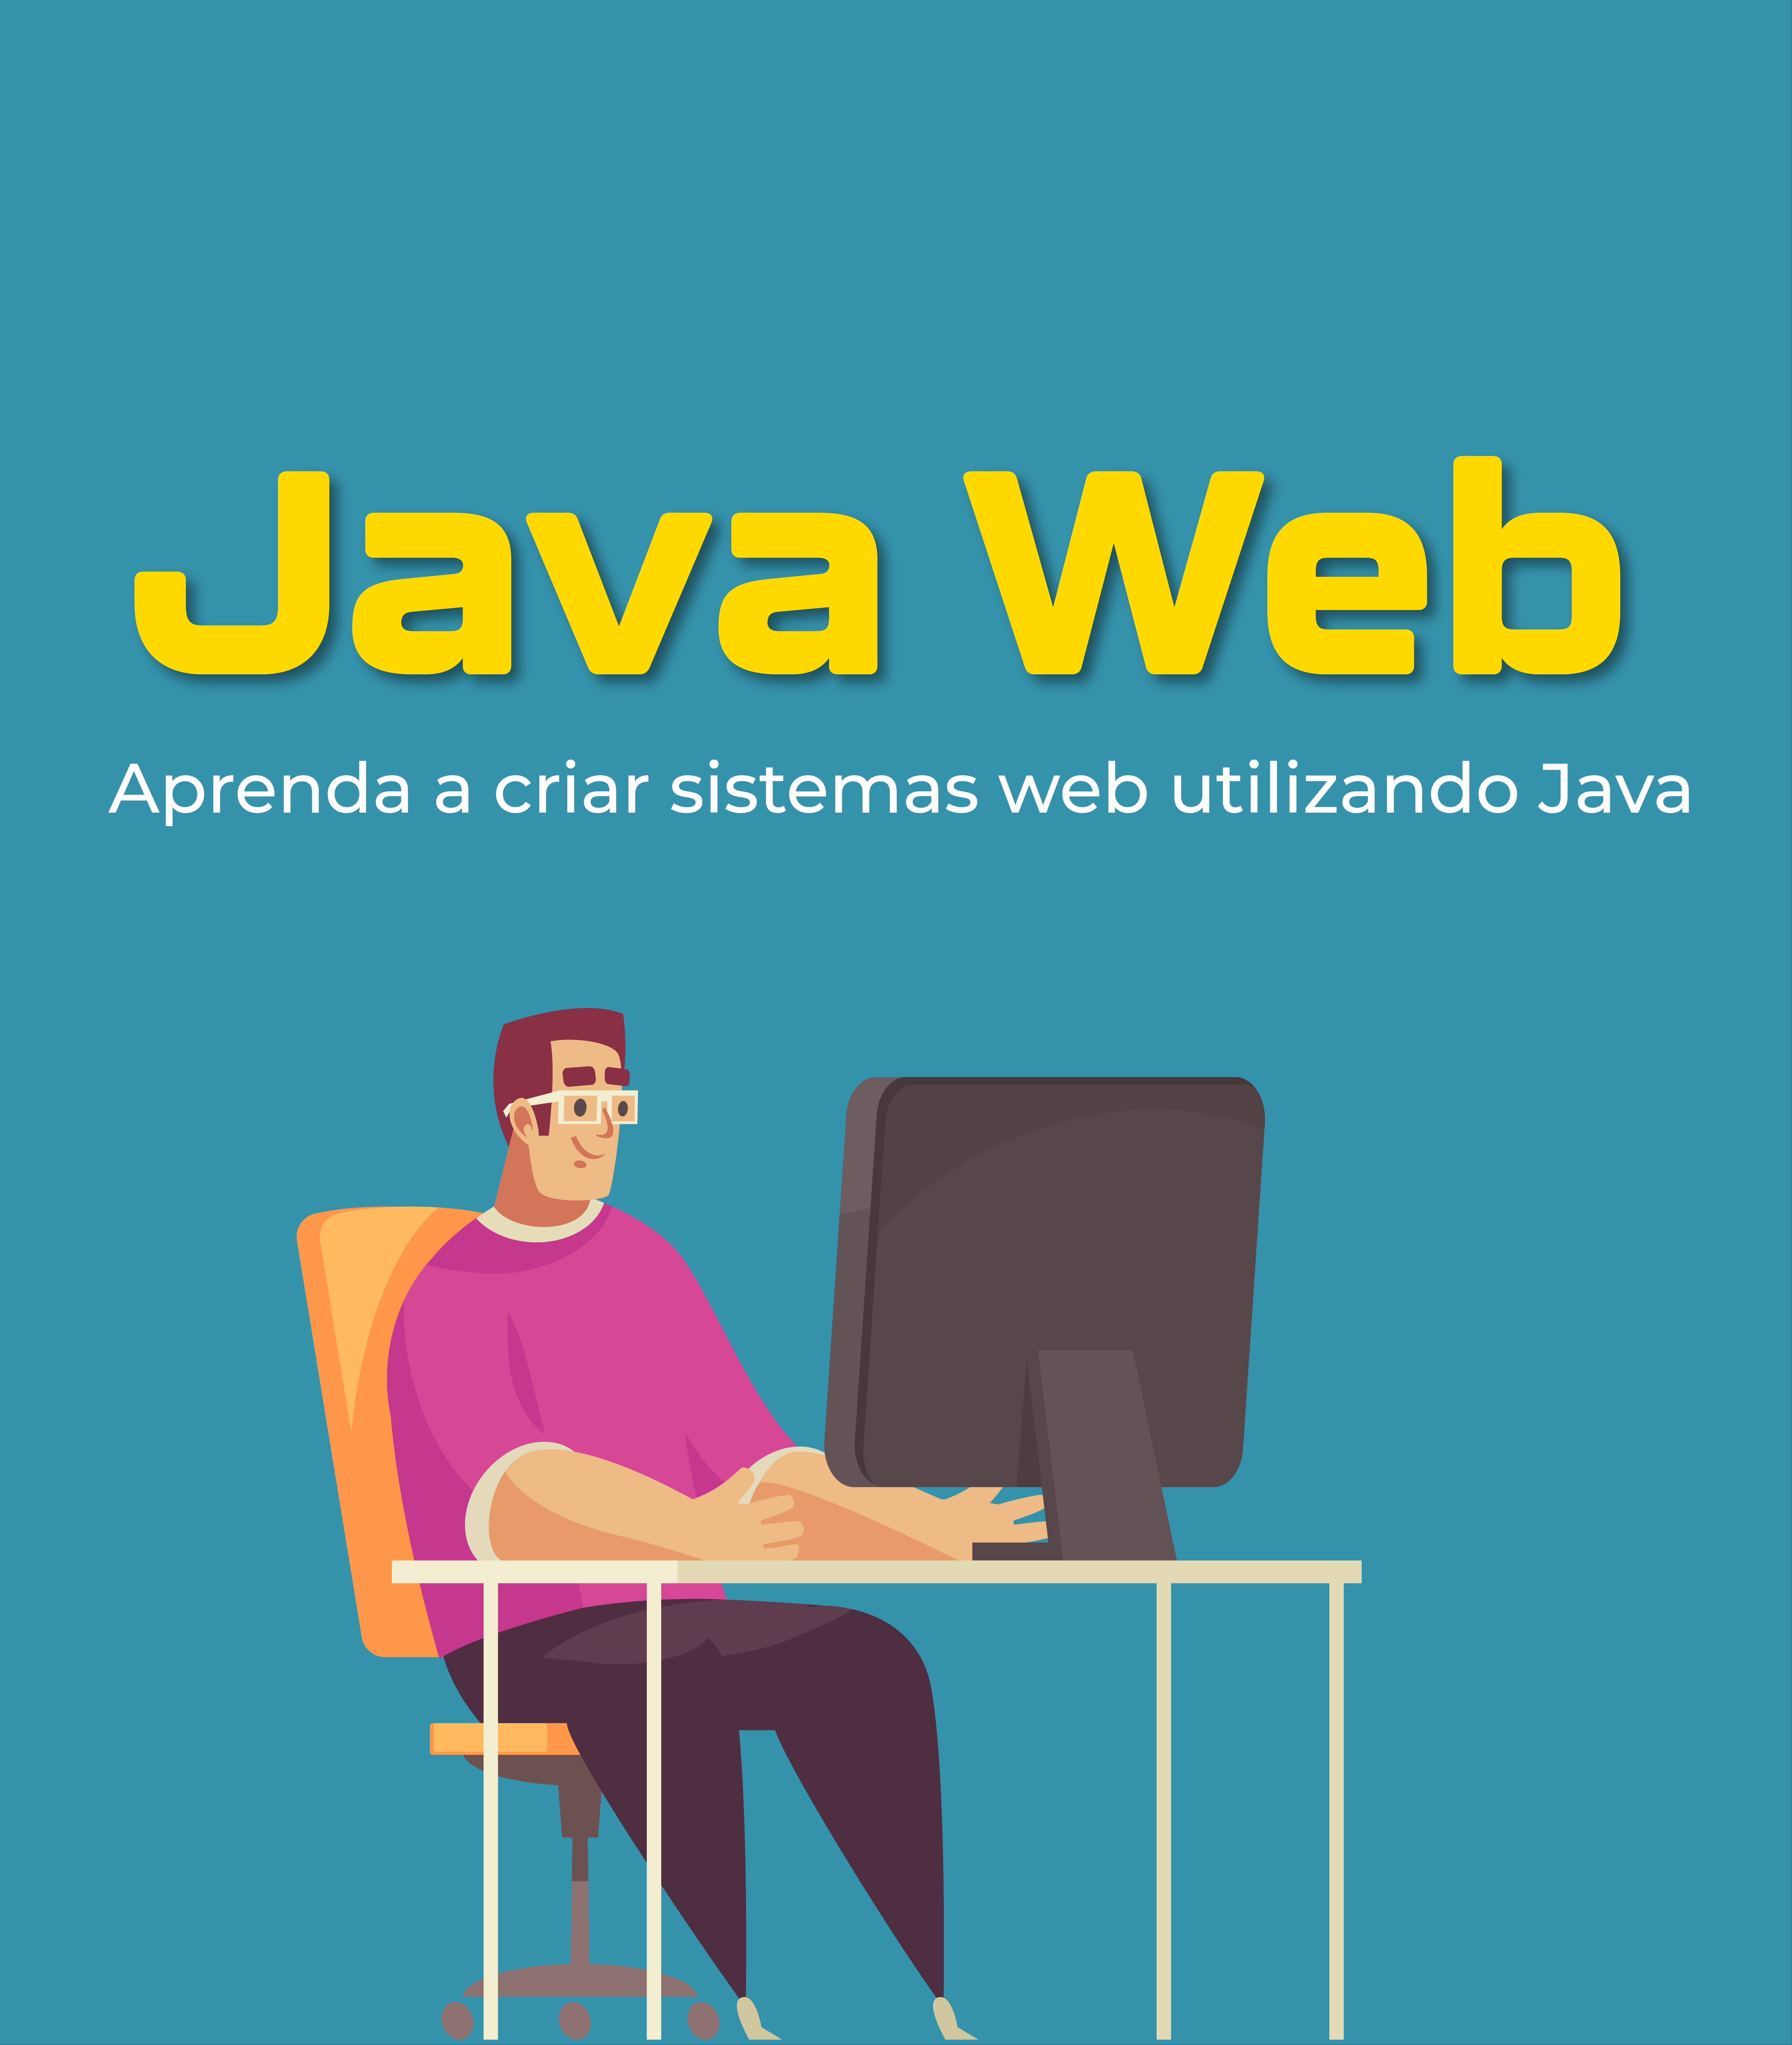 Java Web: Aprenda a criar sistemas web utilizando Java